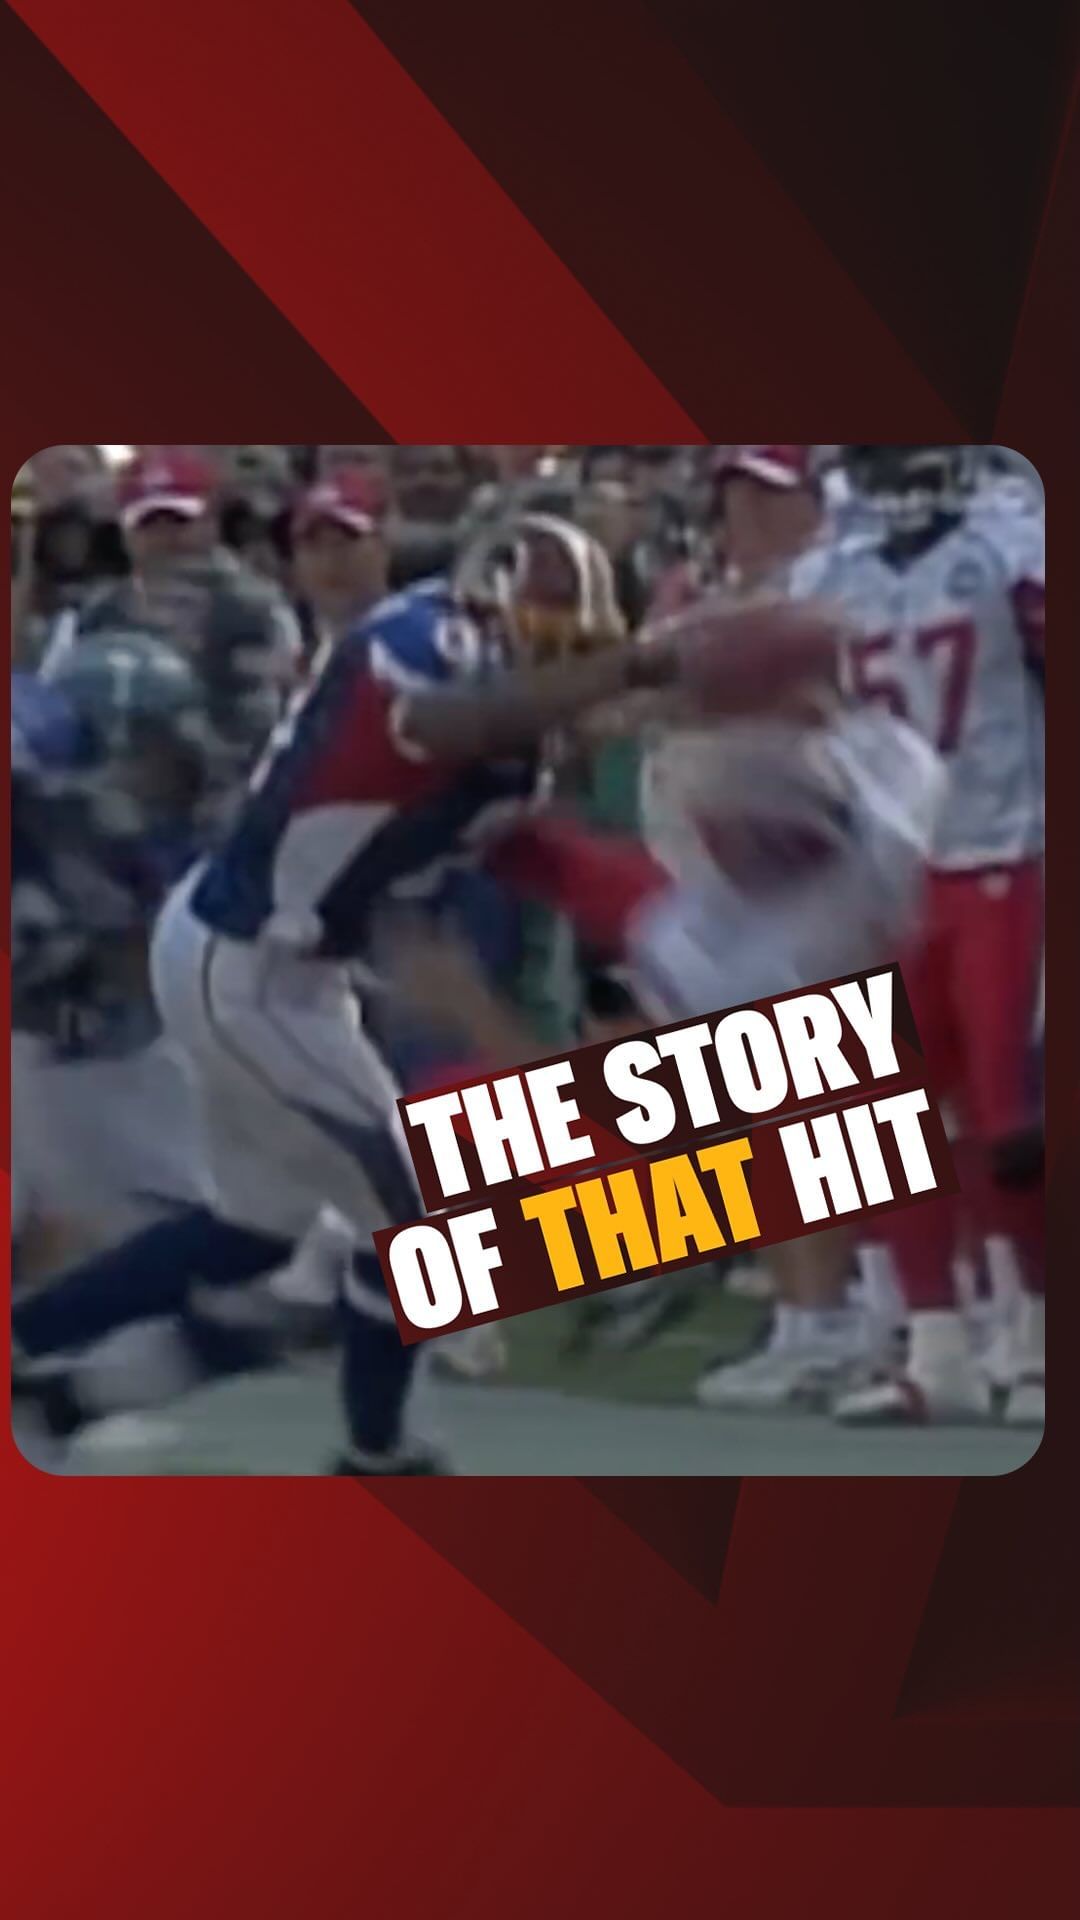 Brian Moorman tells us the story behind 𝙩𝙝𝙖𝙩 Pro Bowl hit...